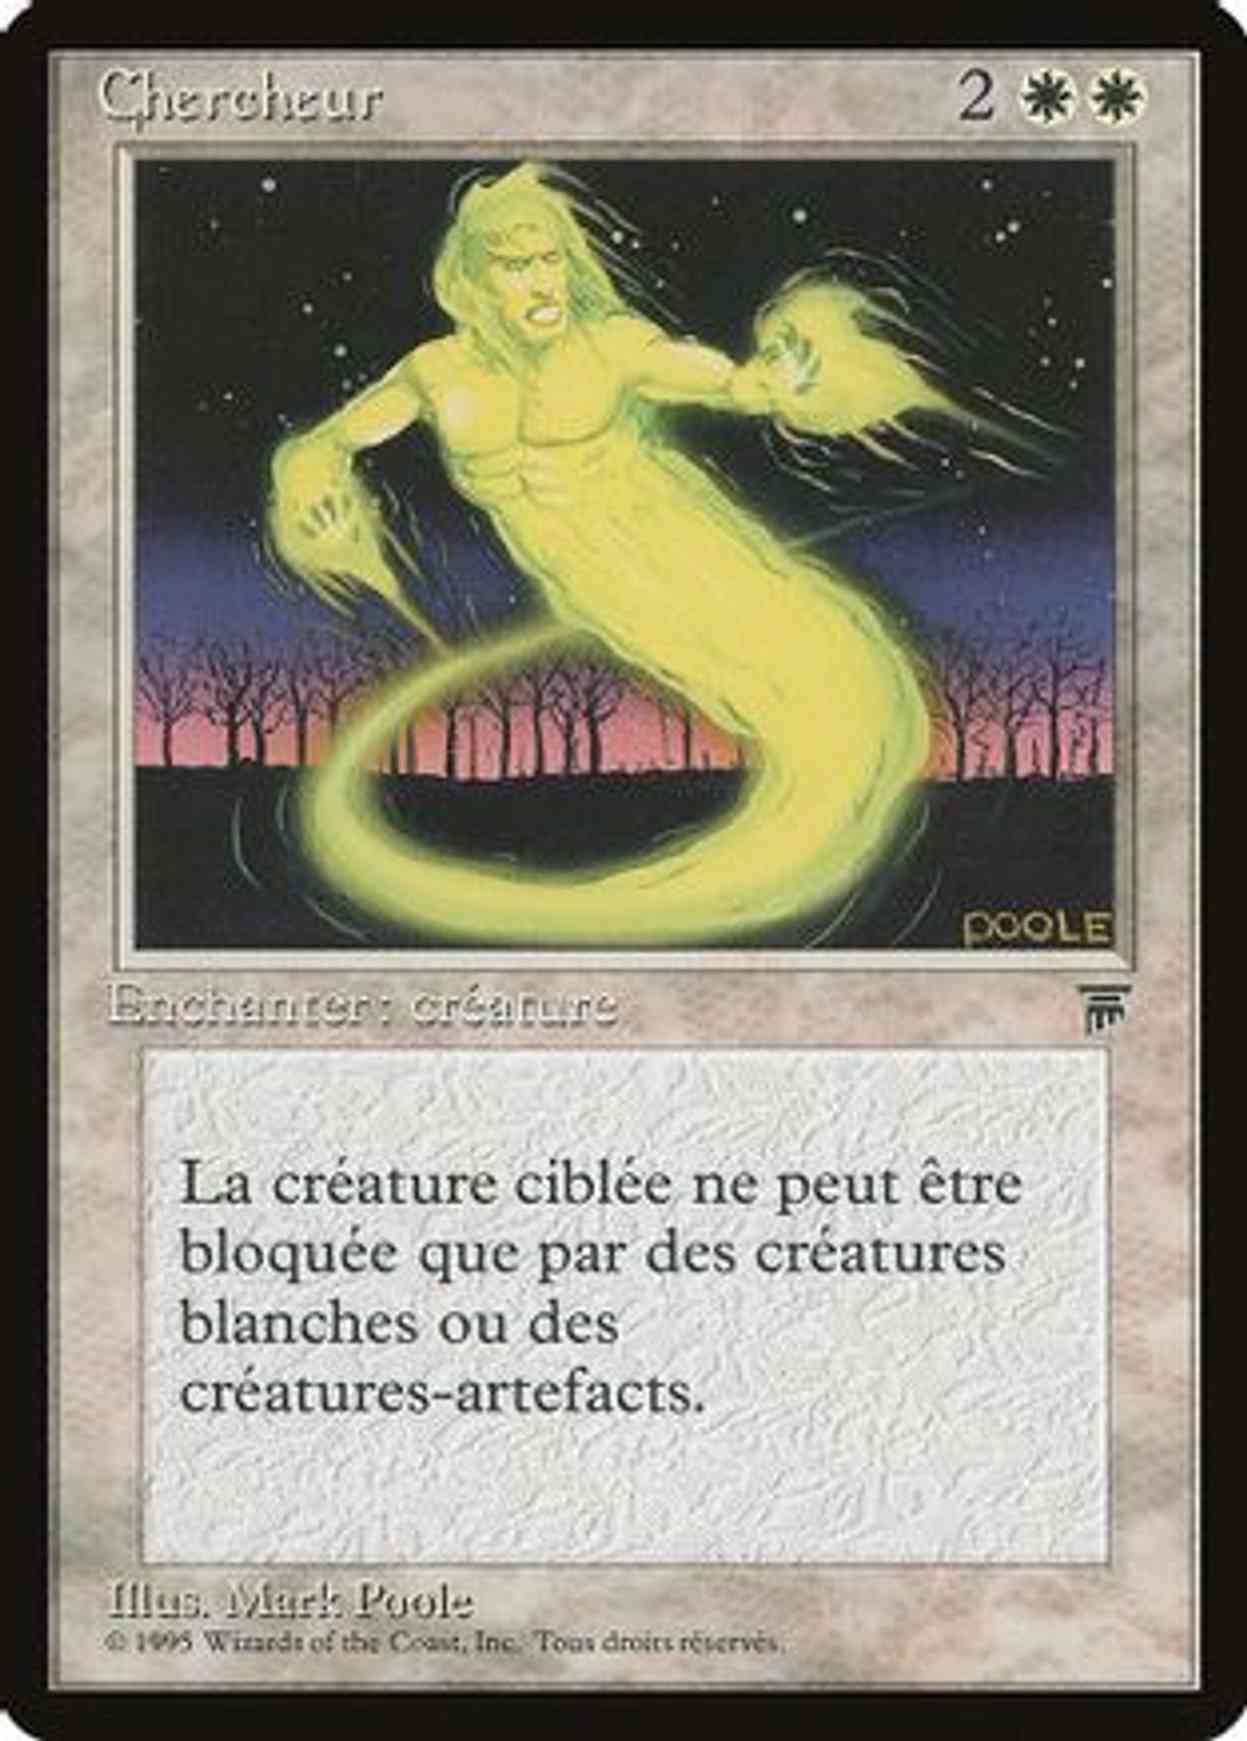 Seeker (French) - "Chercheur" magic card front